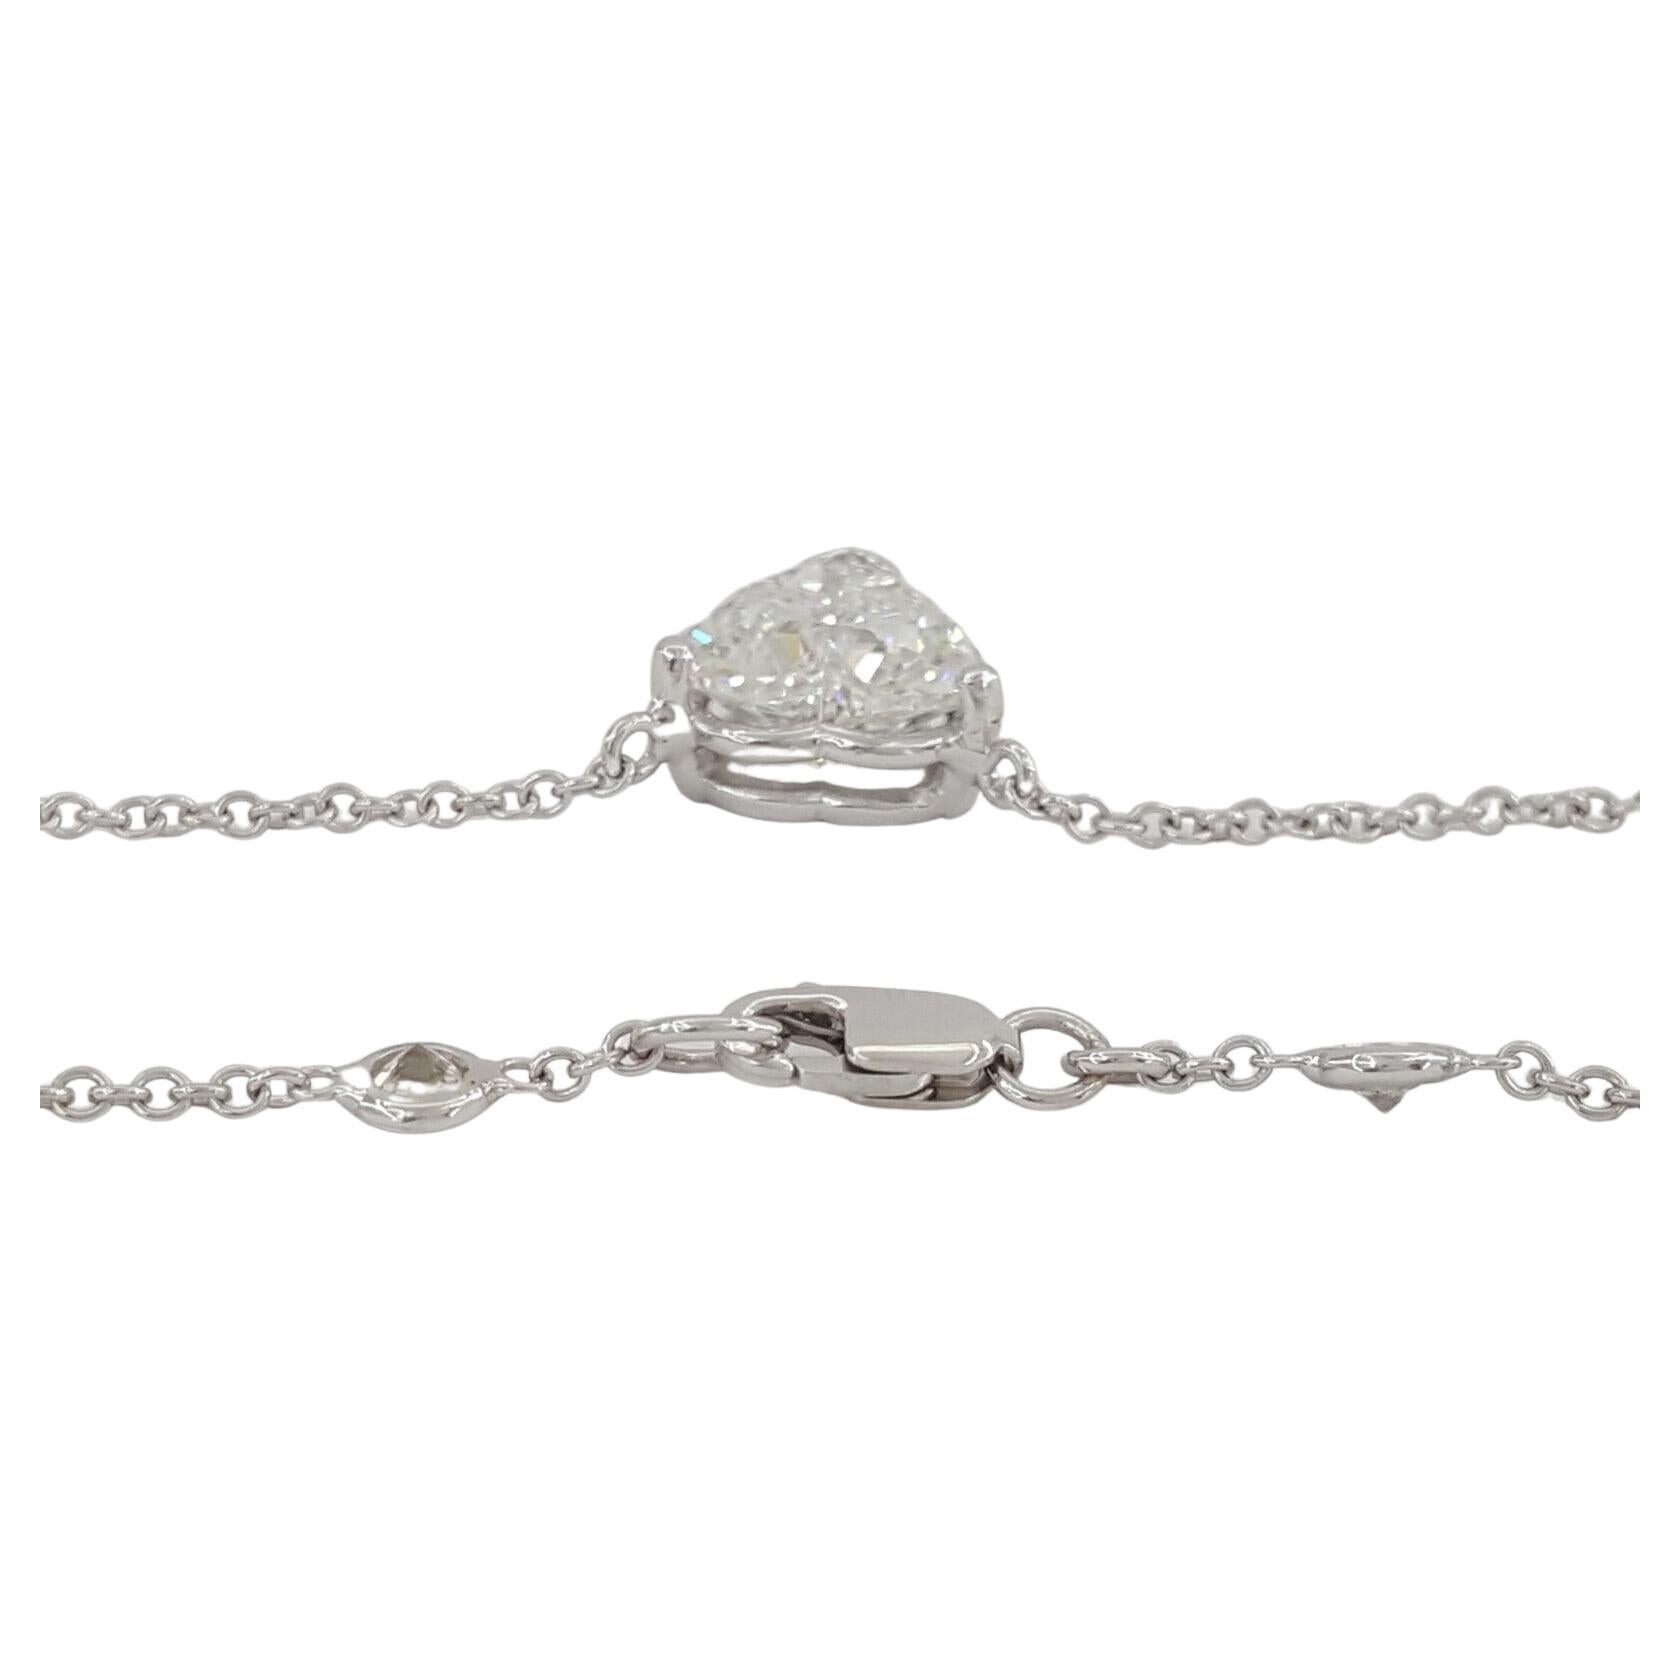 Round Cut GIA Certified 3.12 Carat Heart Cut Diamond Pendant Necklace For Sale